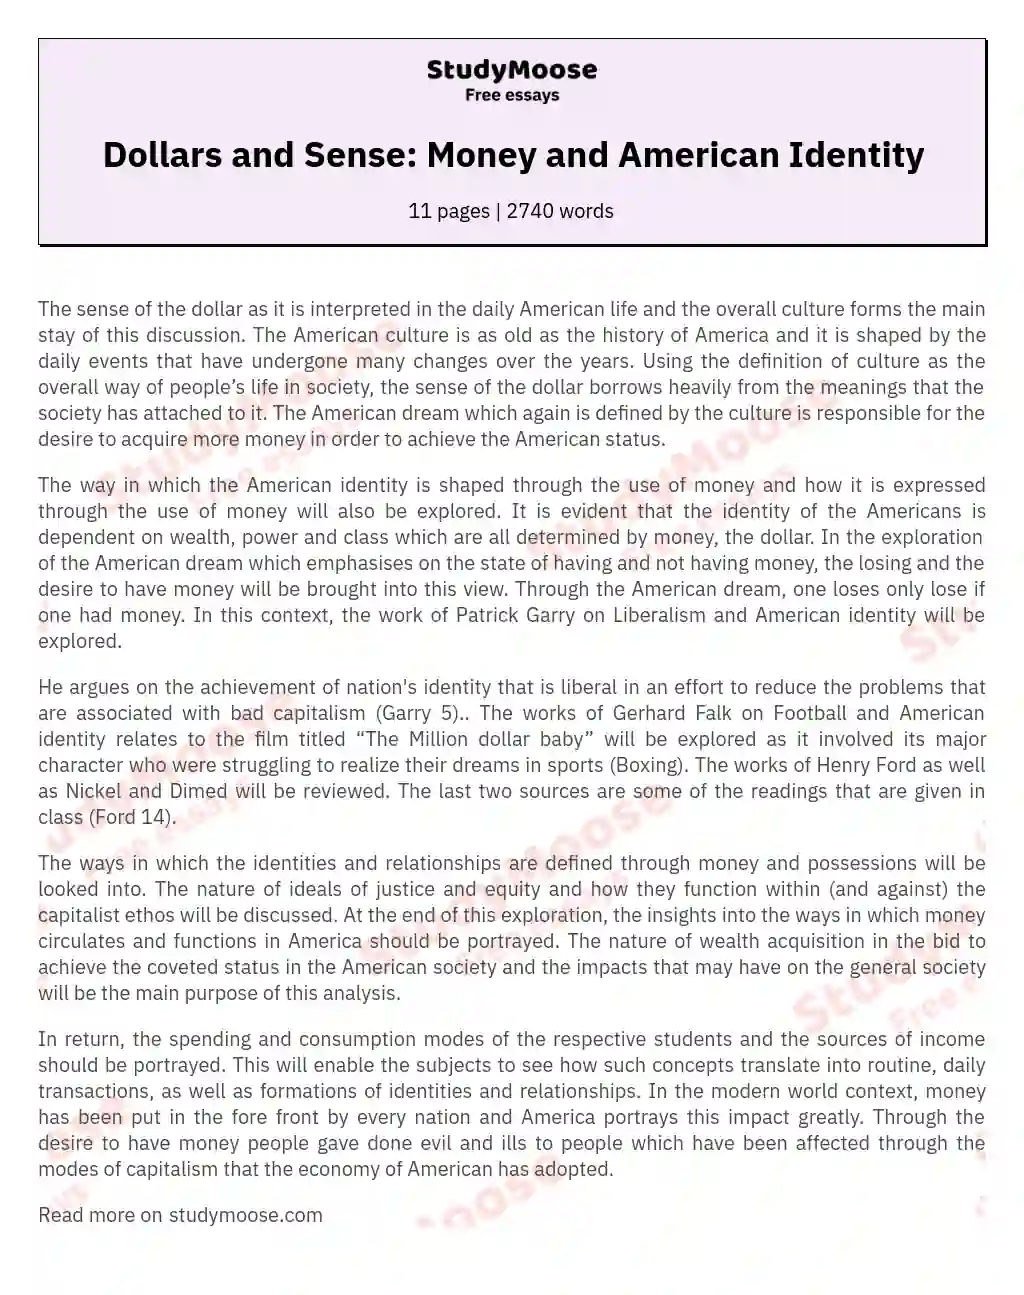 Dollars and Sense: Money and American Identity essay